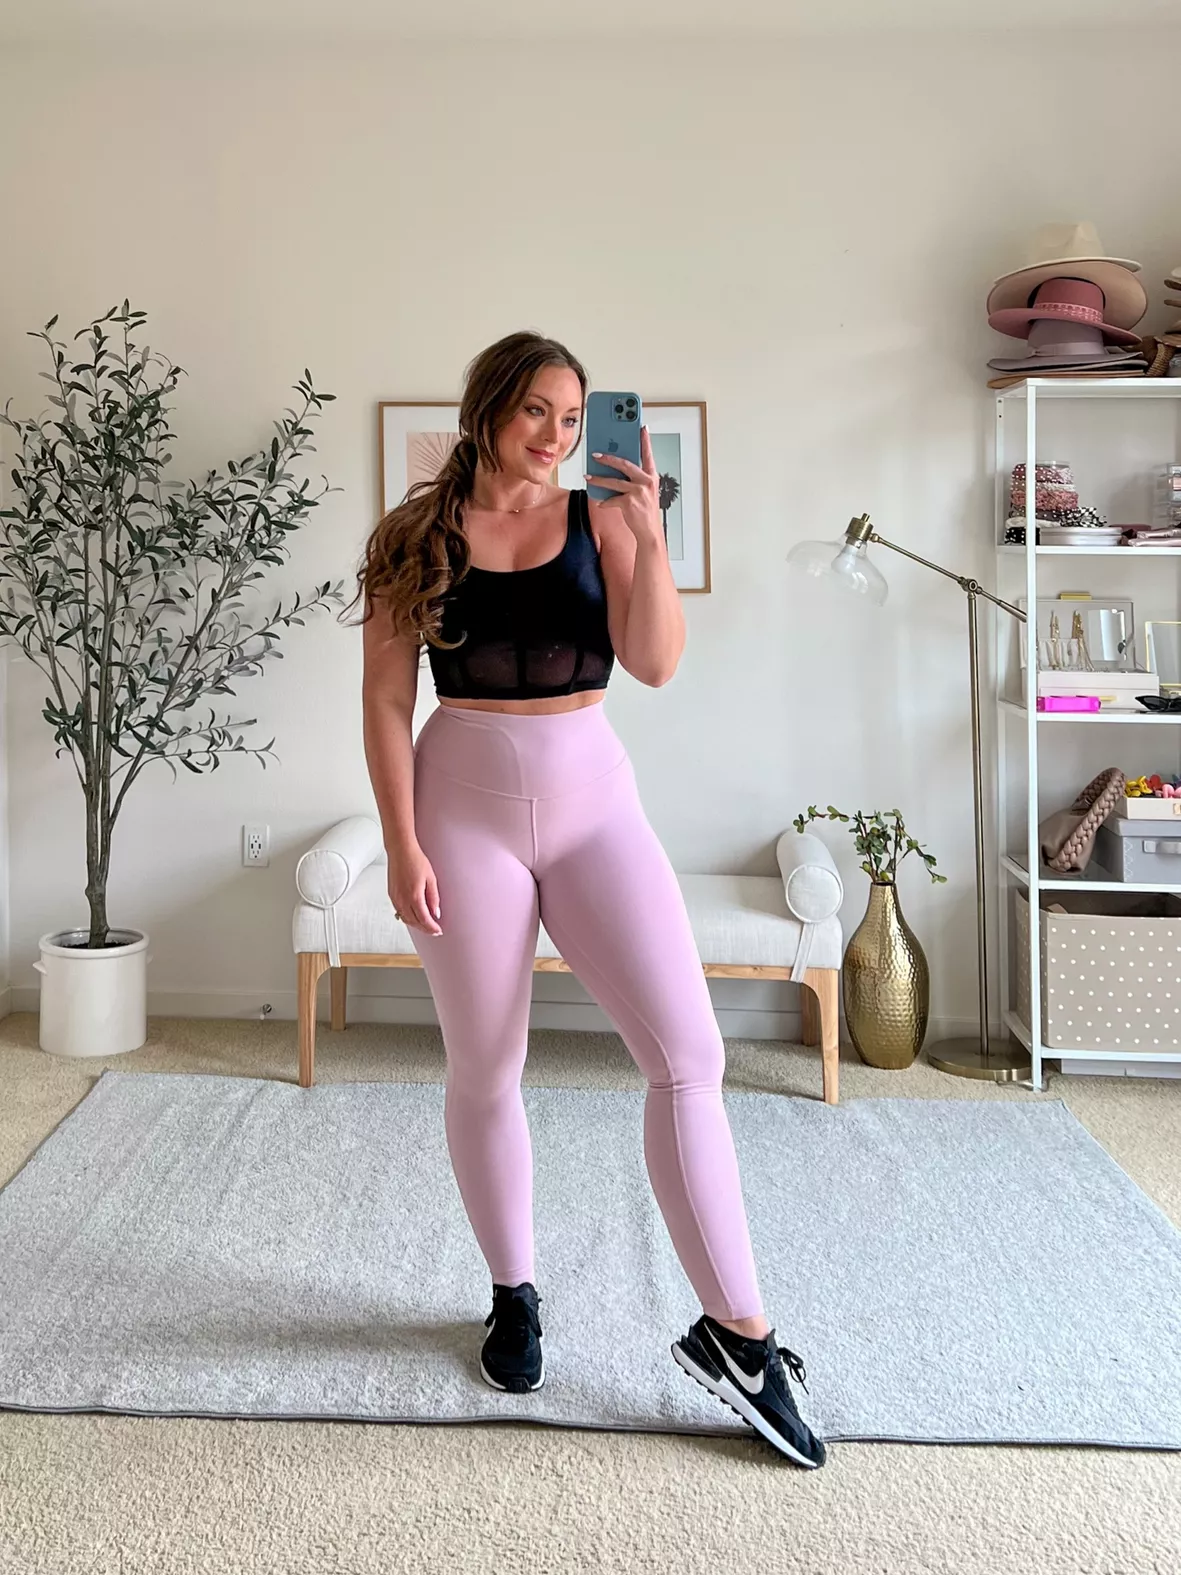 Lululemon Align Leggings Women’s Size 8 28’ Pink And Black Tye Dye